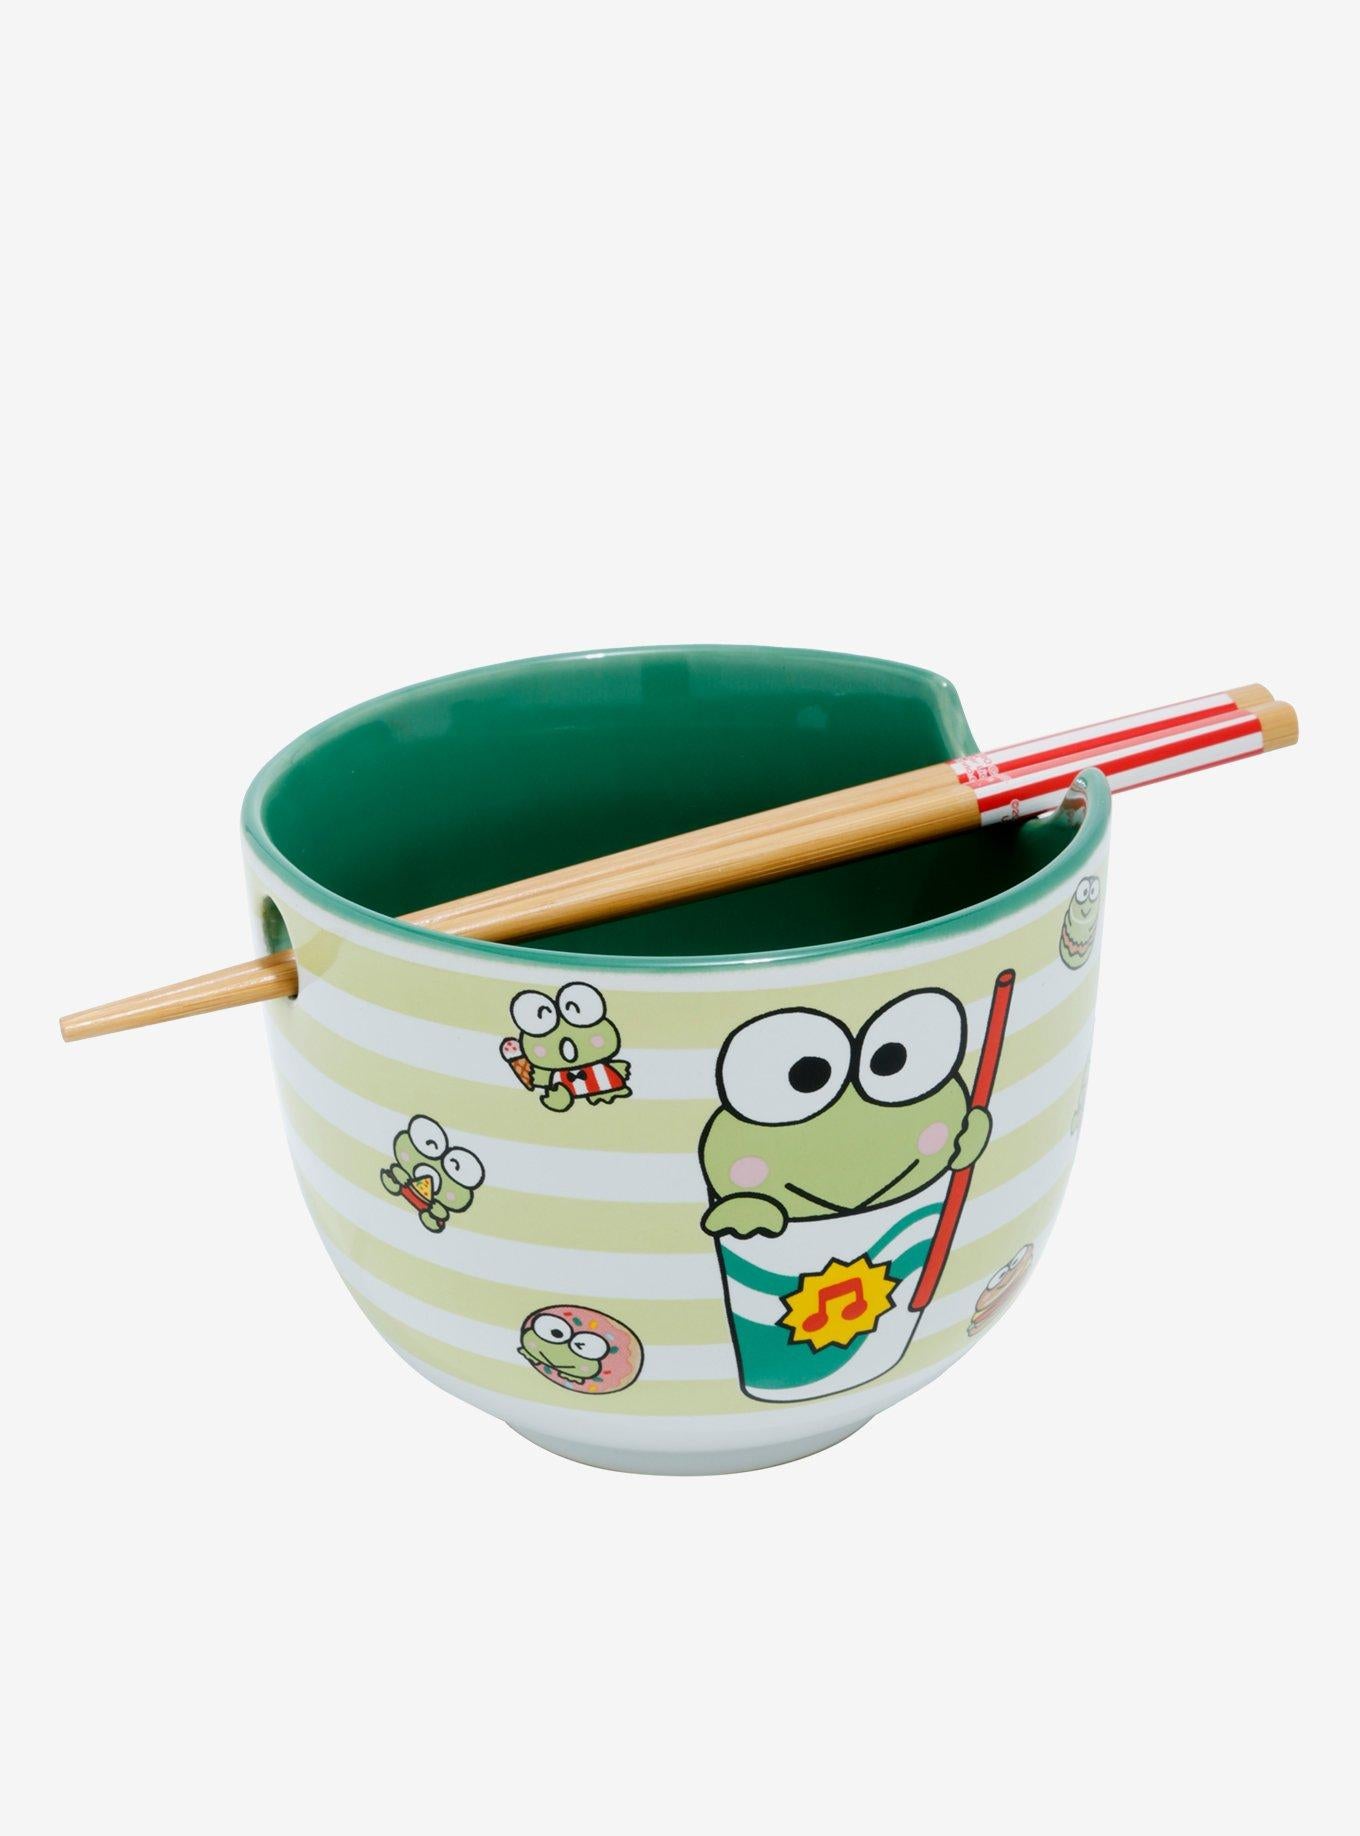 Keroppi Ramen Bowl With Chopsticks